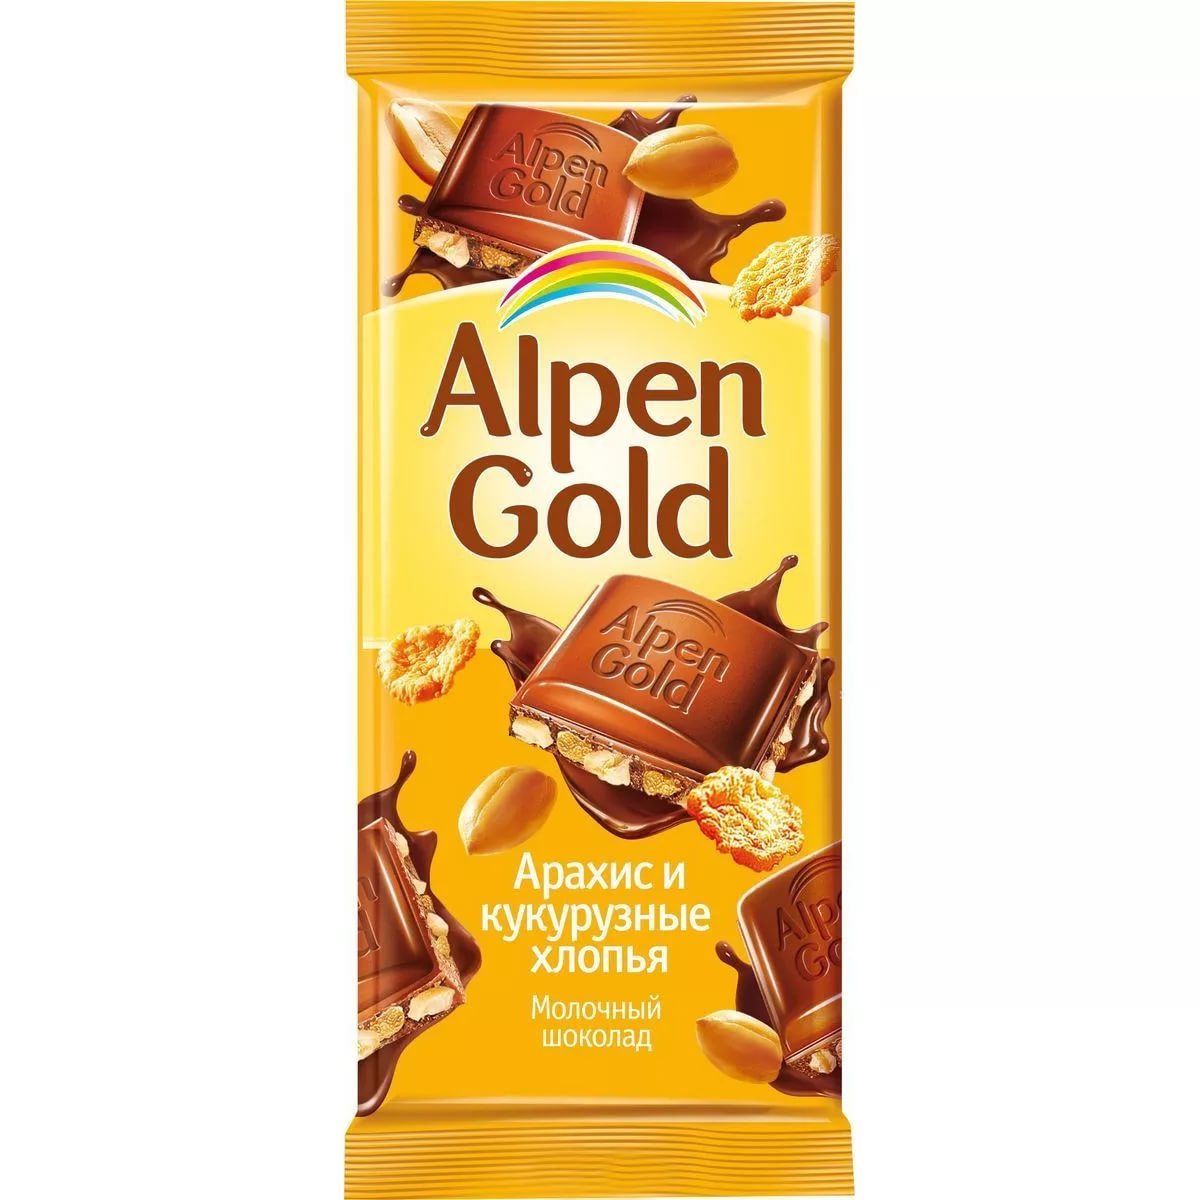 Шоколад Alpen Gold 90/85г арахис-кукурузные хлопья